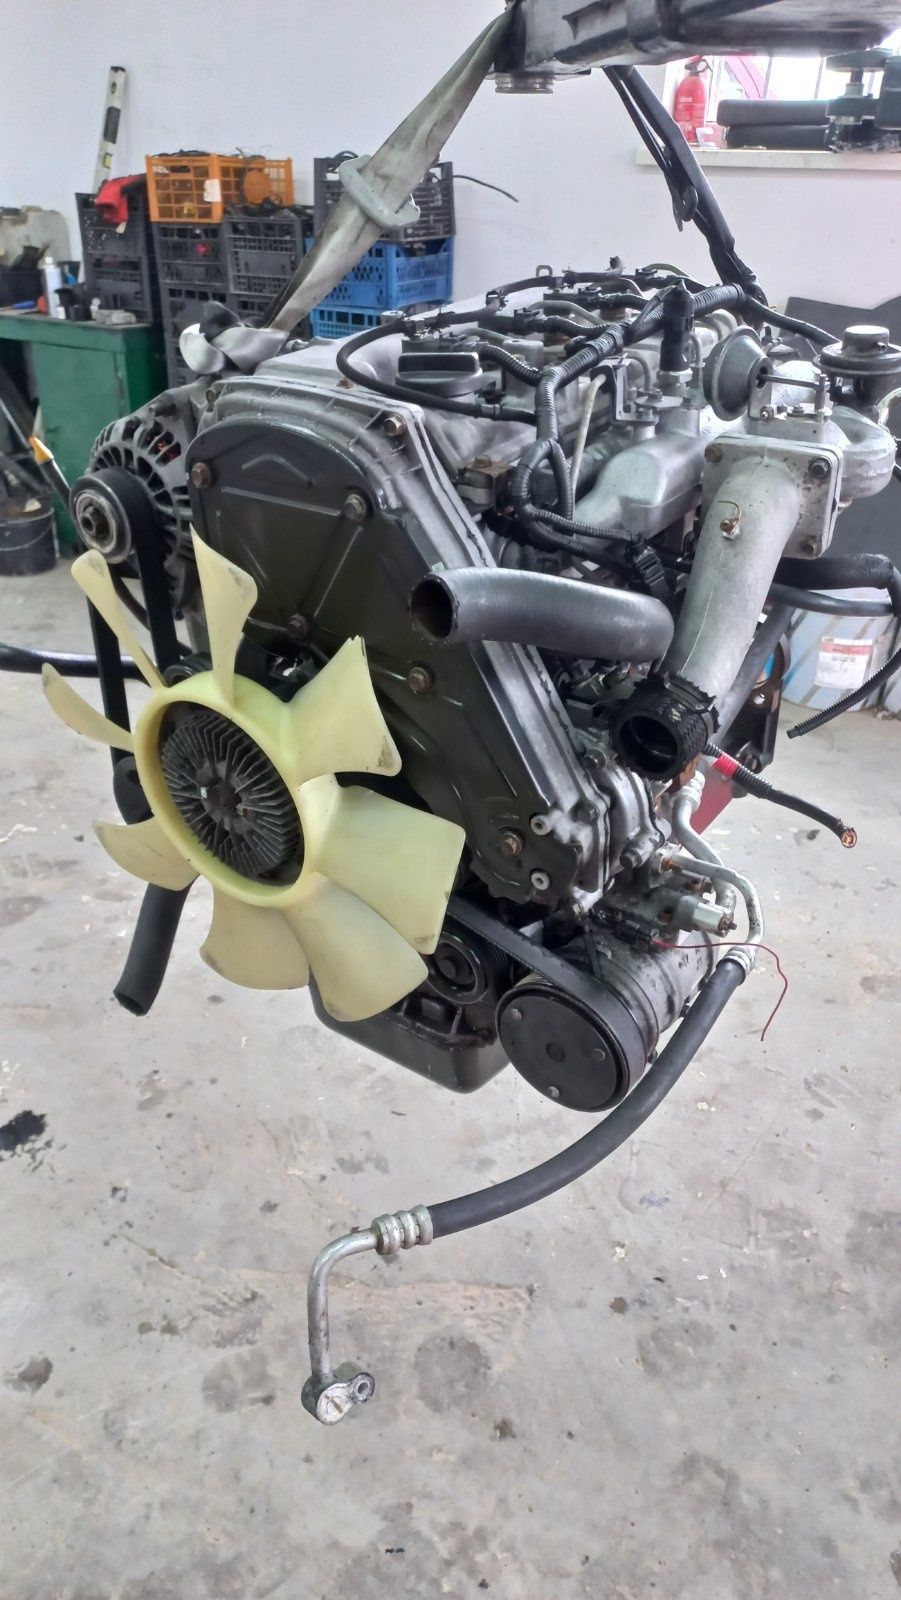 Мотор KIA SORENTO D4CB. Двигун Кіа соренто 2.5D 140кс. Двигатель H1.